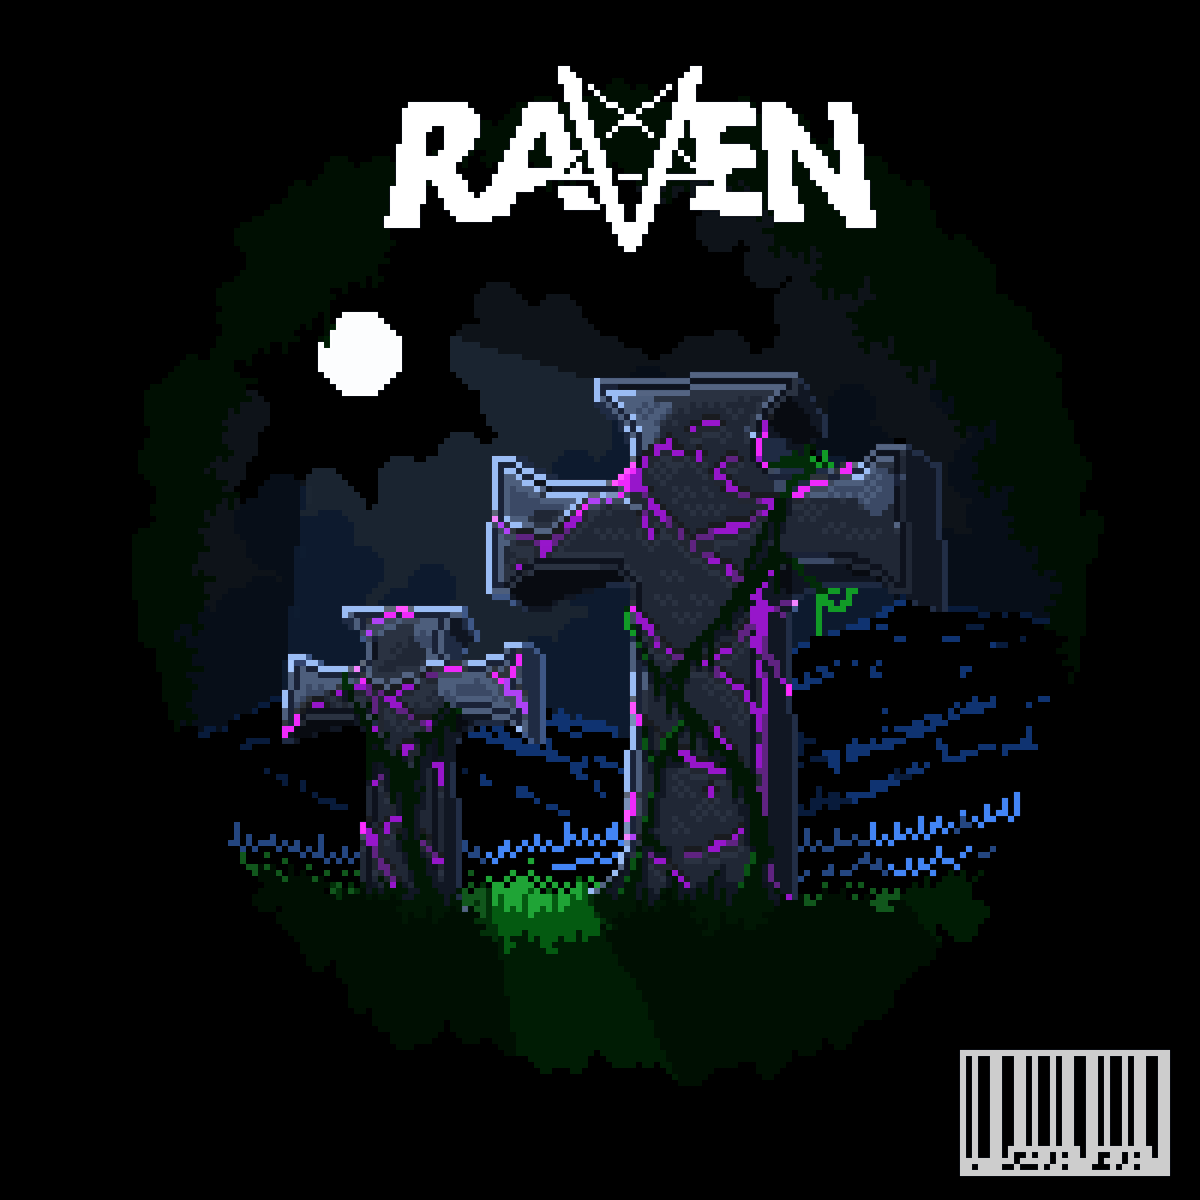 Raven Graveyard Vinyl Cover☠️
Portfolio behance.net/xRaven
#pixelart #vinylcover